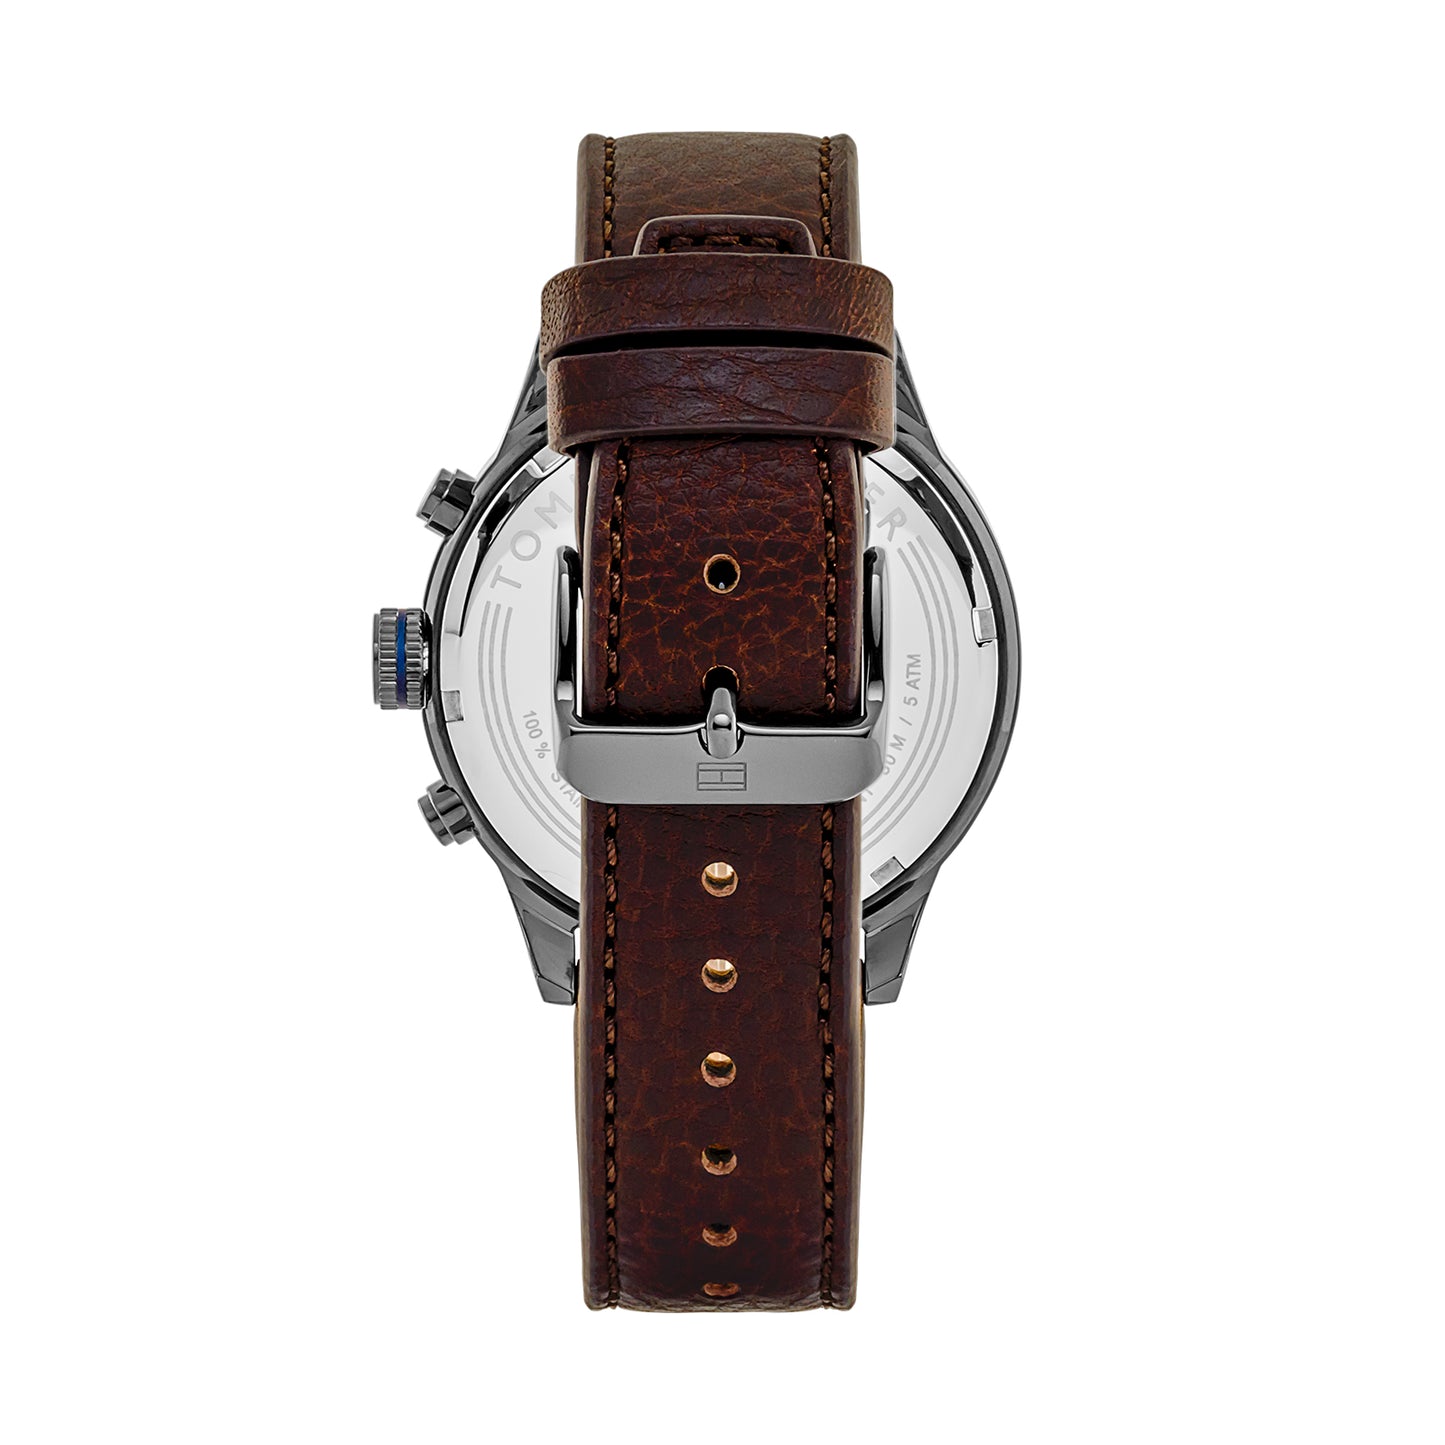 Tommy Hilfiger 1791593 Men's Leather Watch